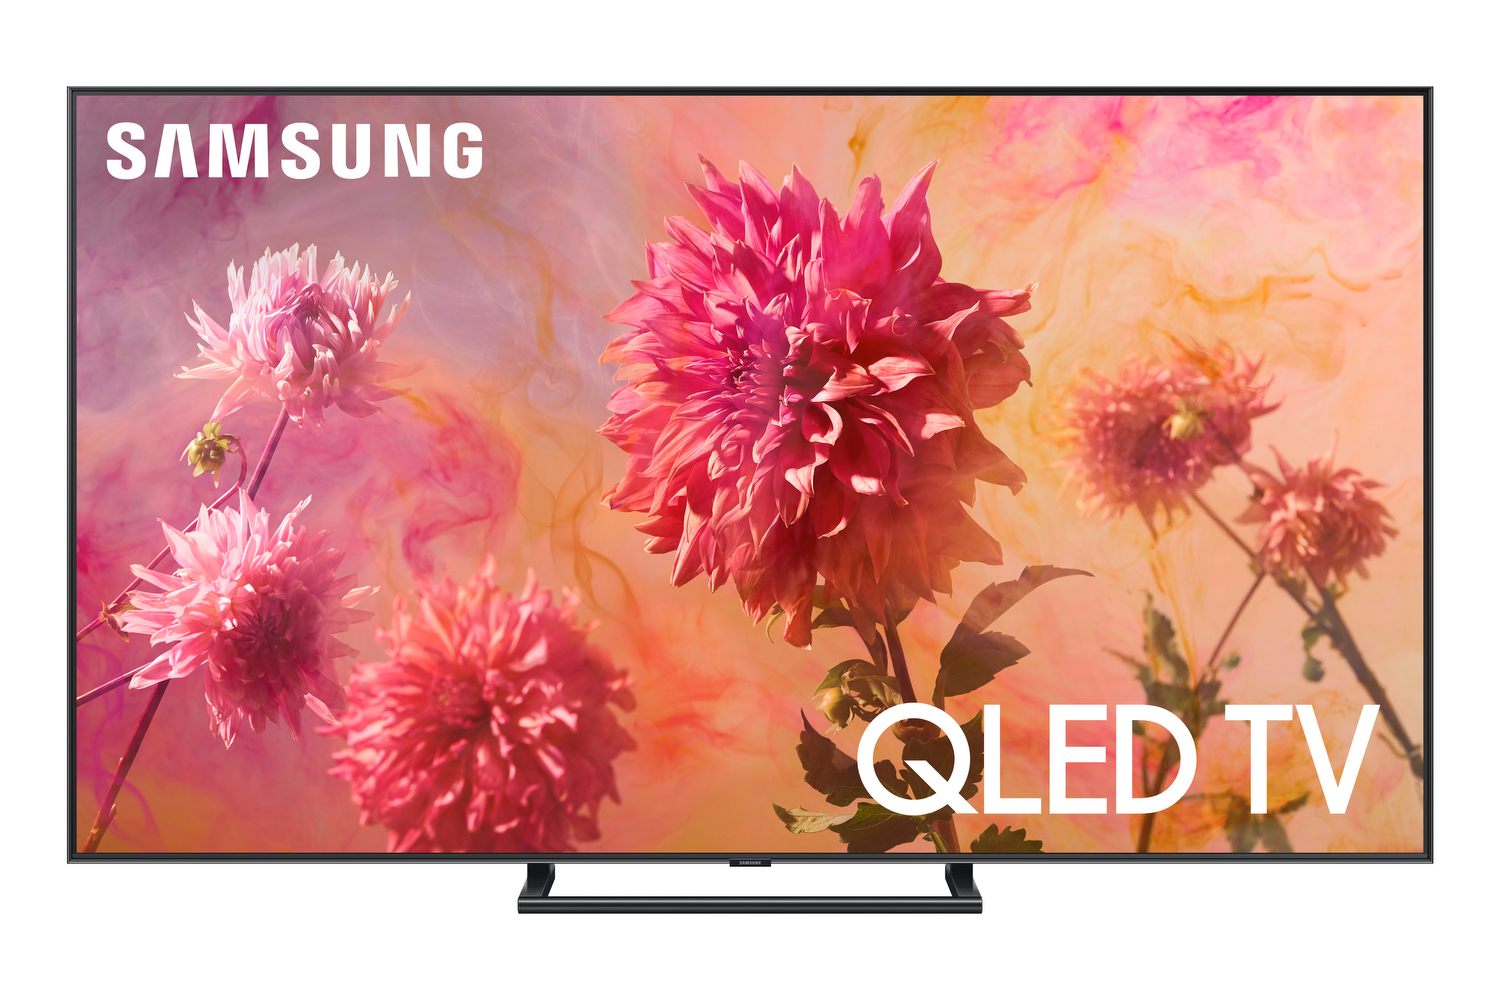 Samsung 2018 QLED TV Lineup | Q9FN Model